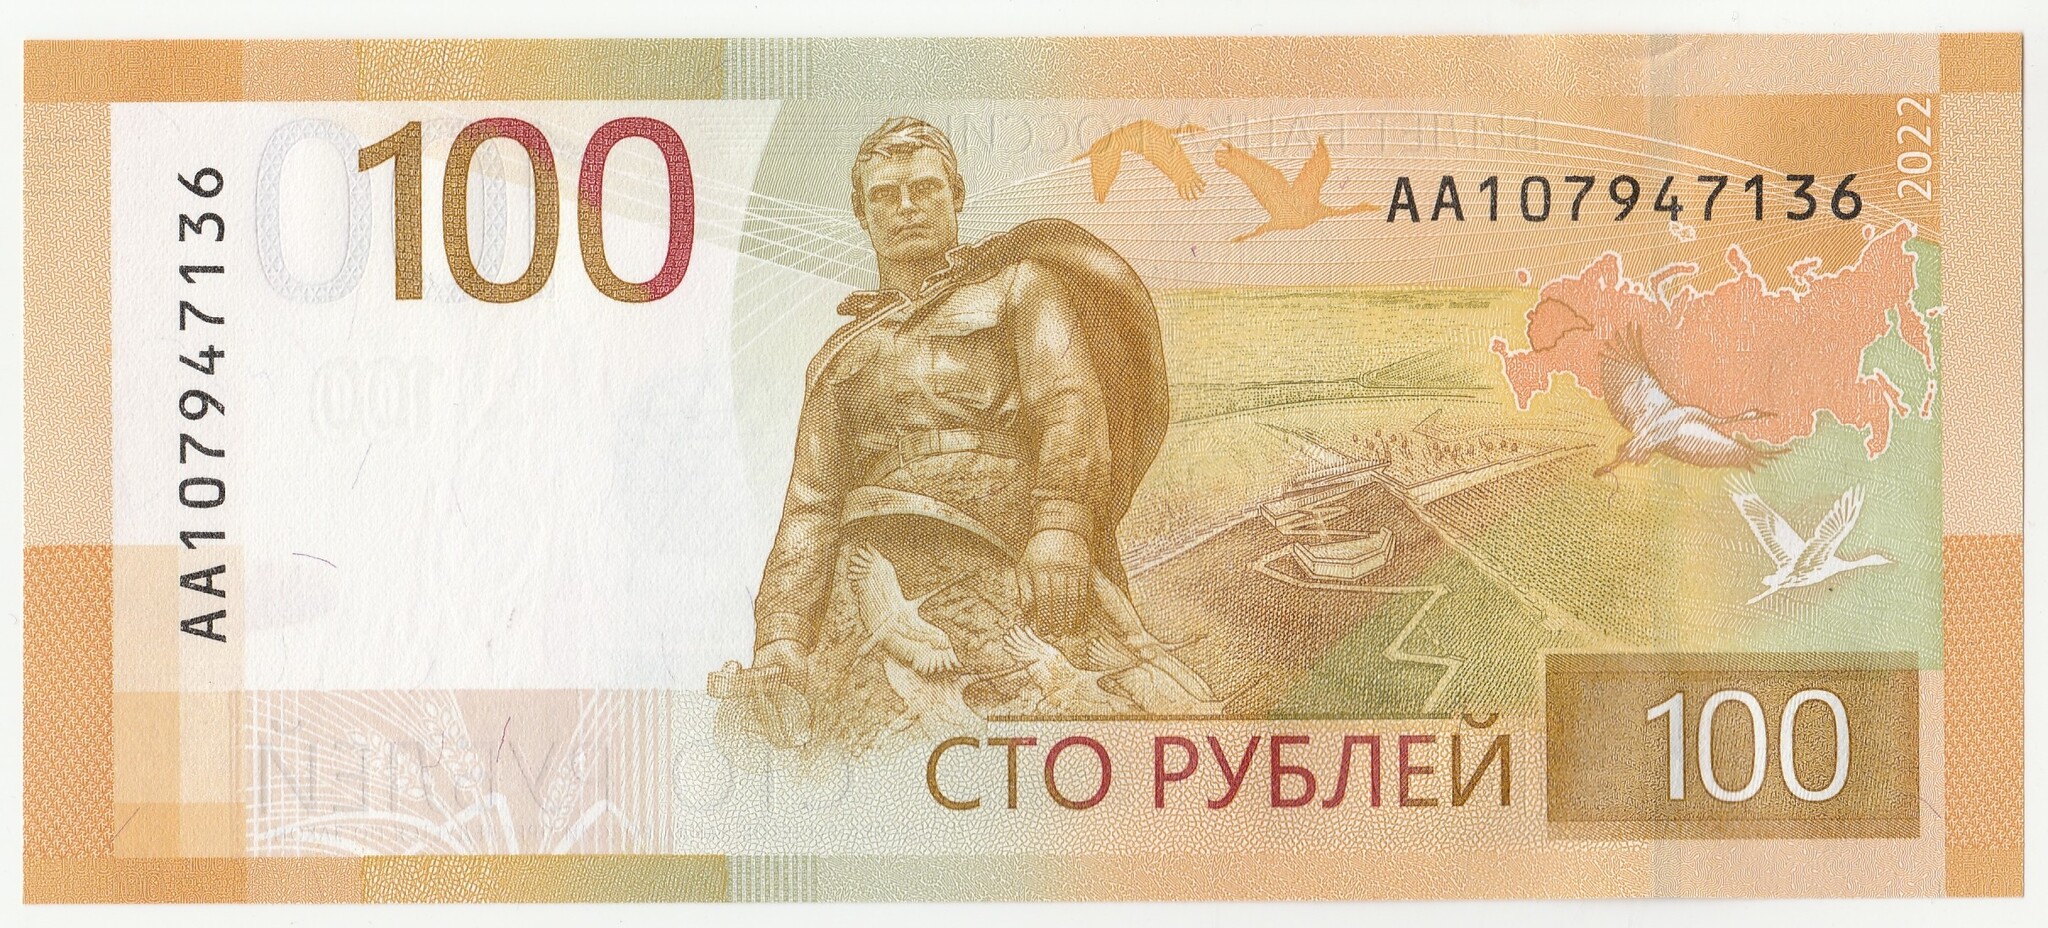 100 рублей на steam фото 28